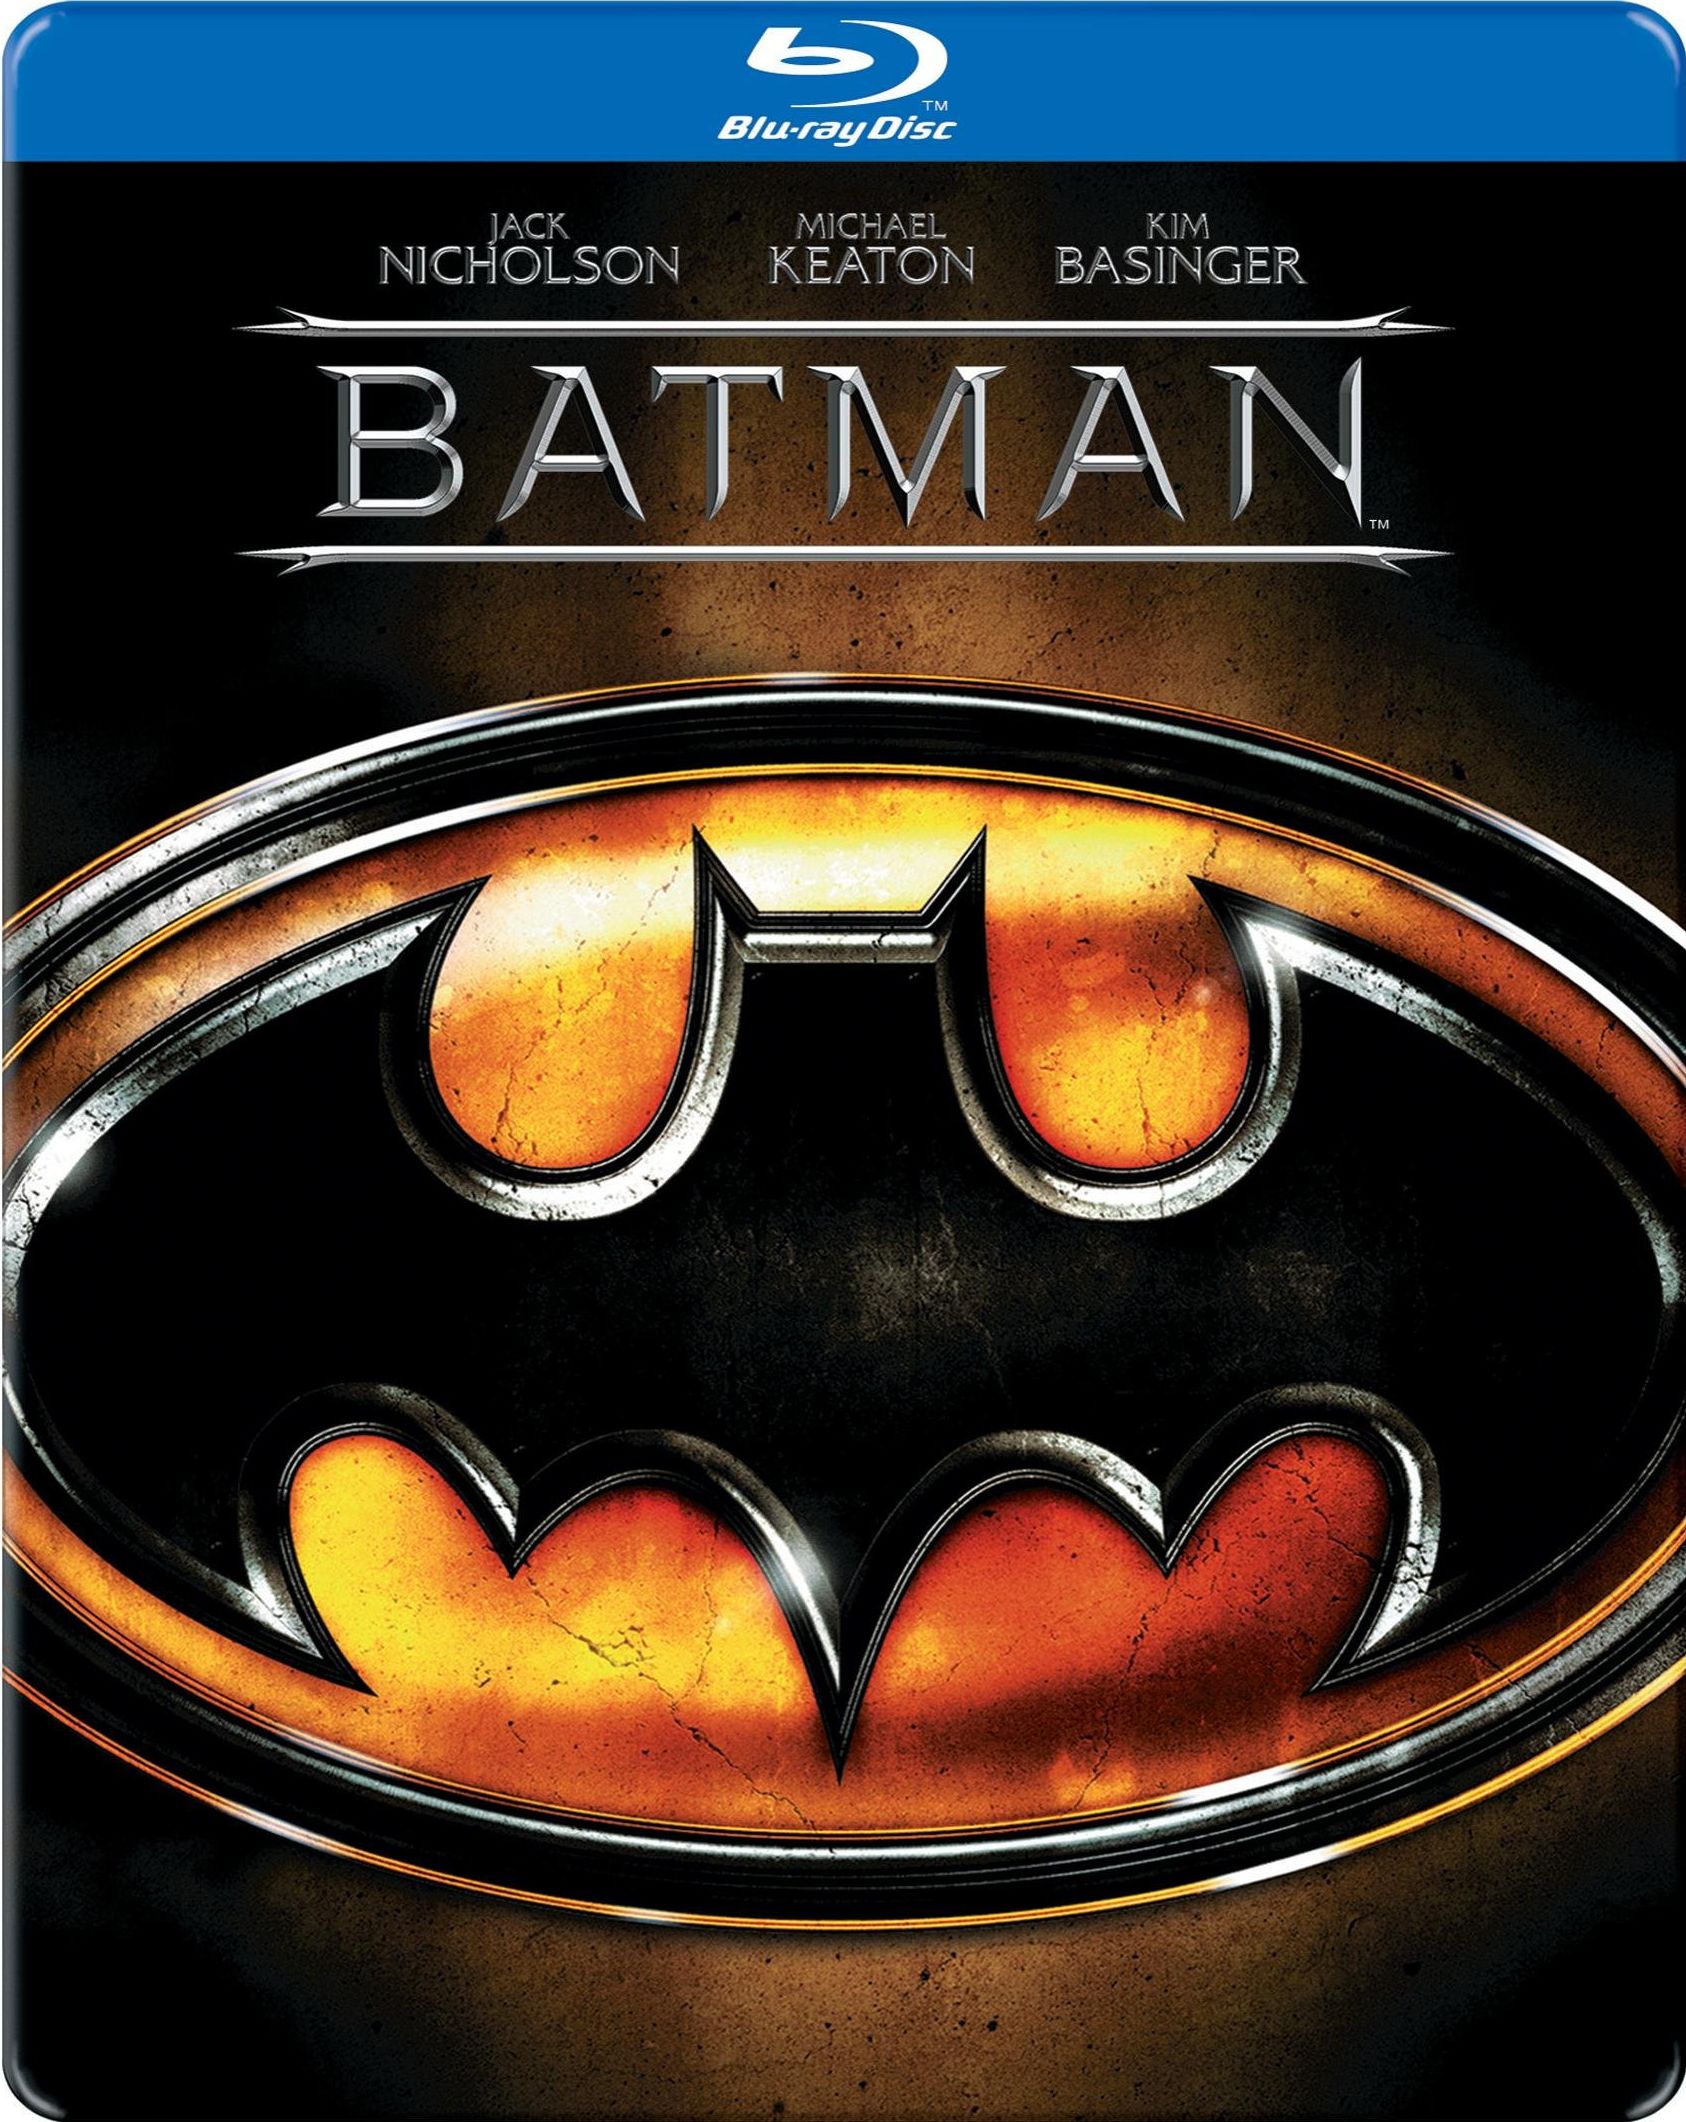 Arriba 33+ imagen batman 1989 dvd release date